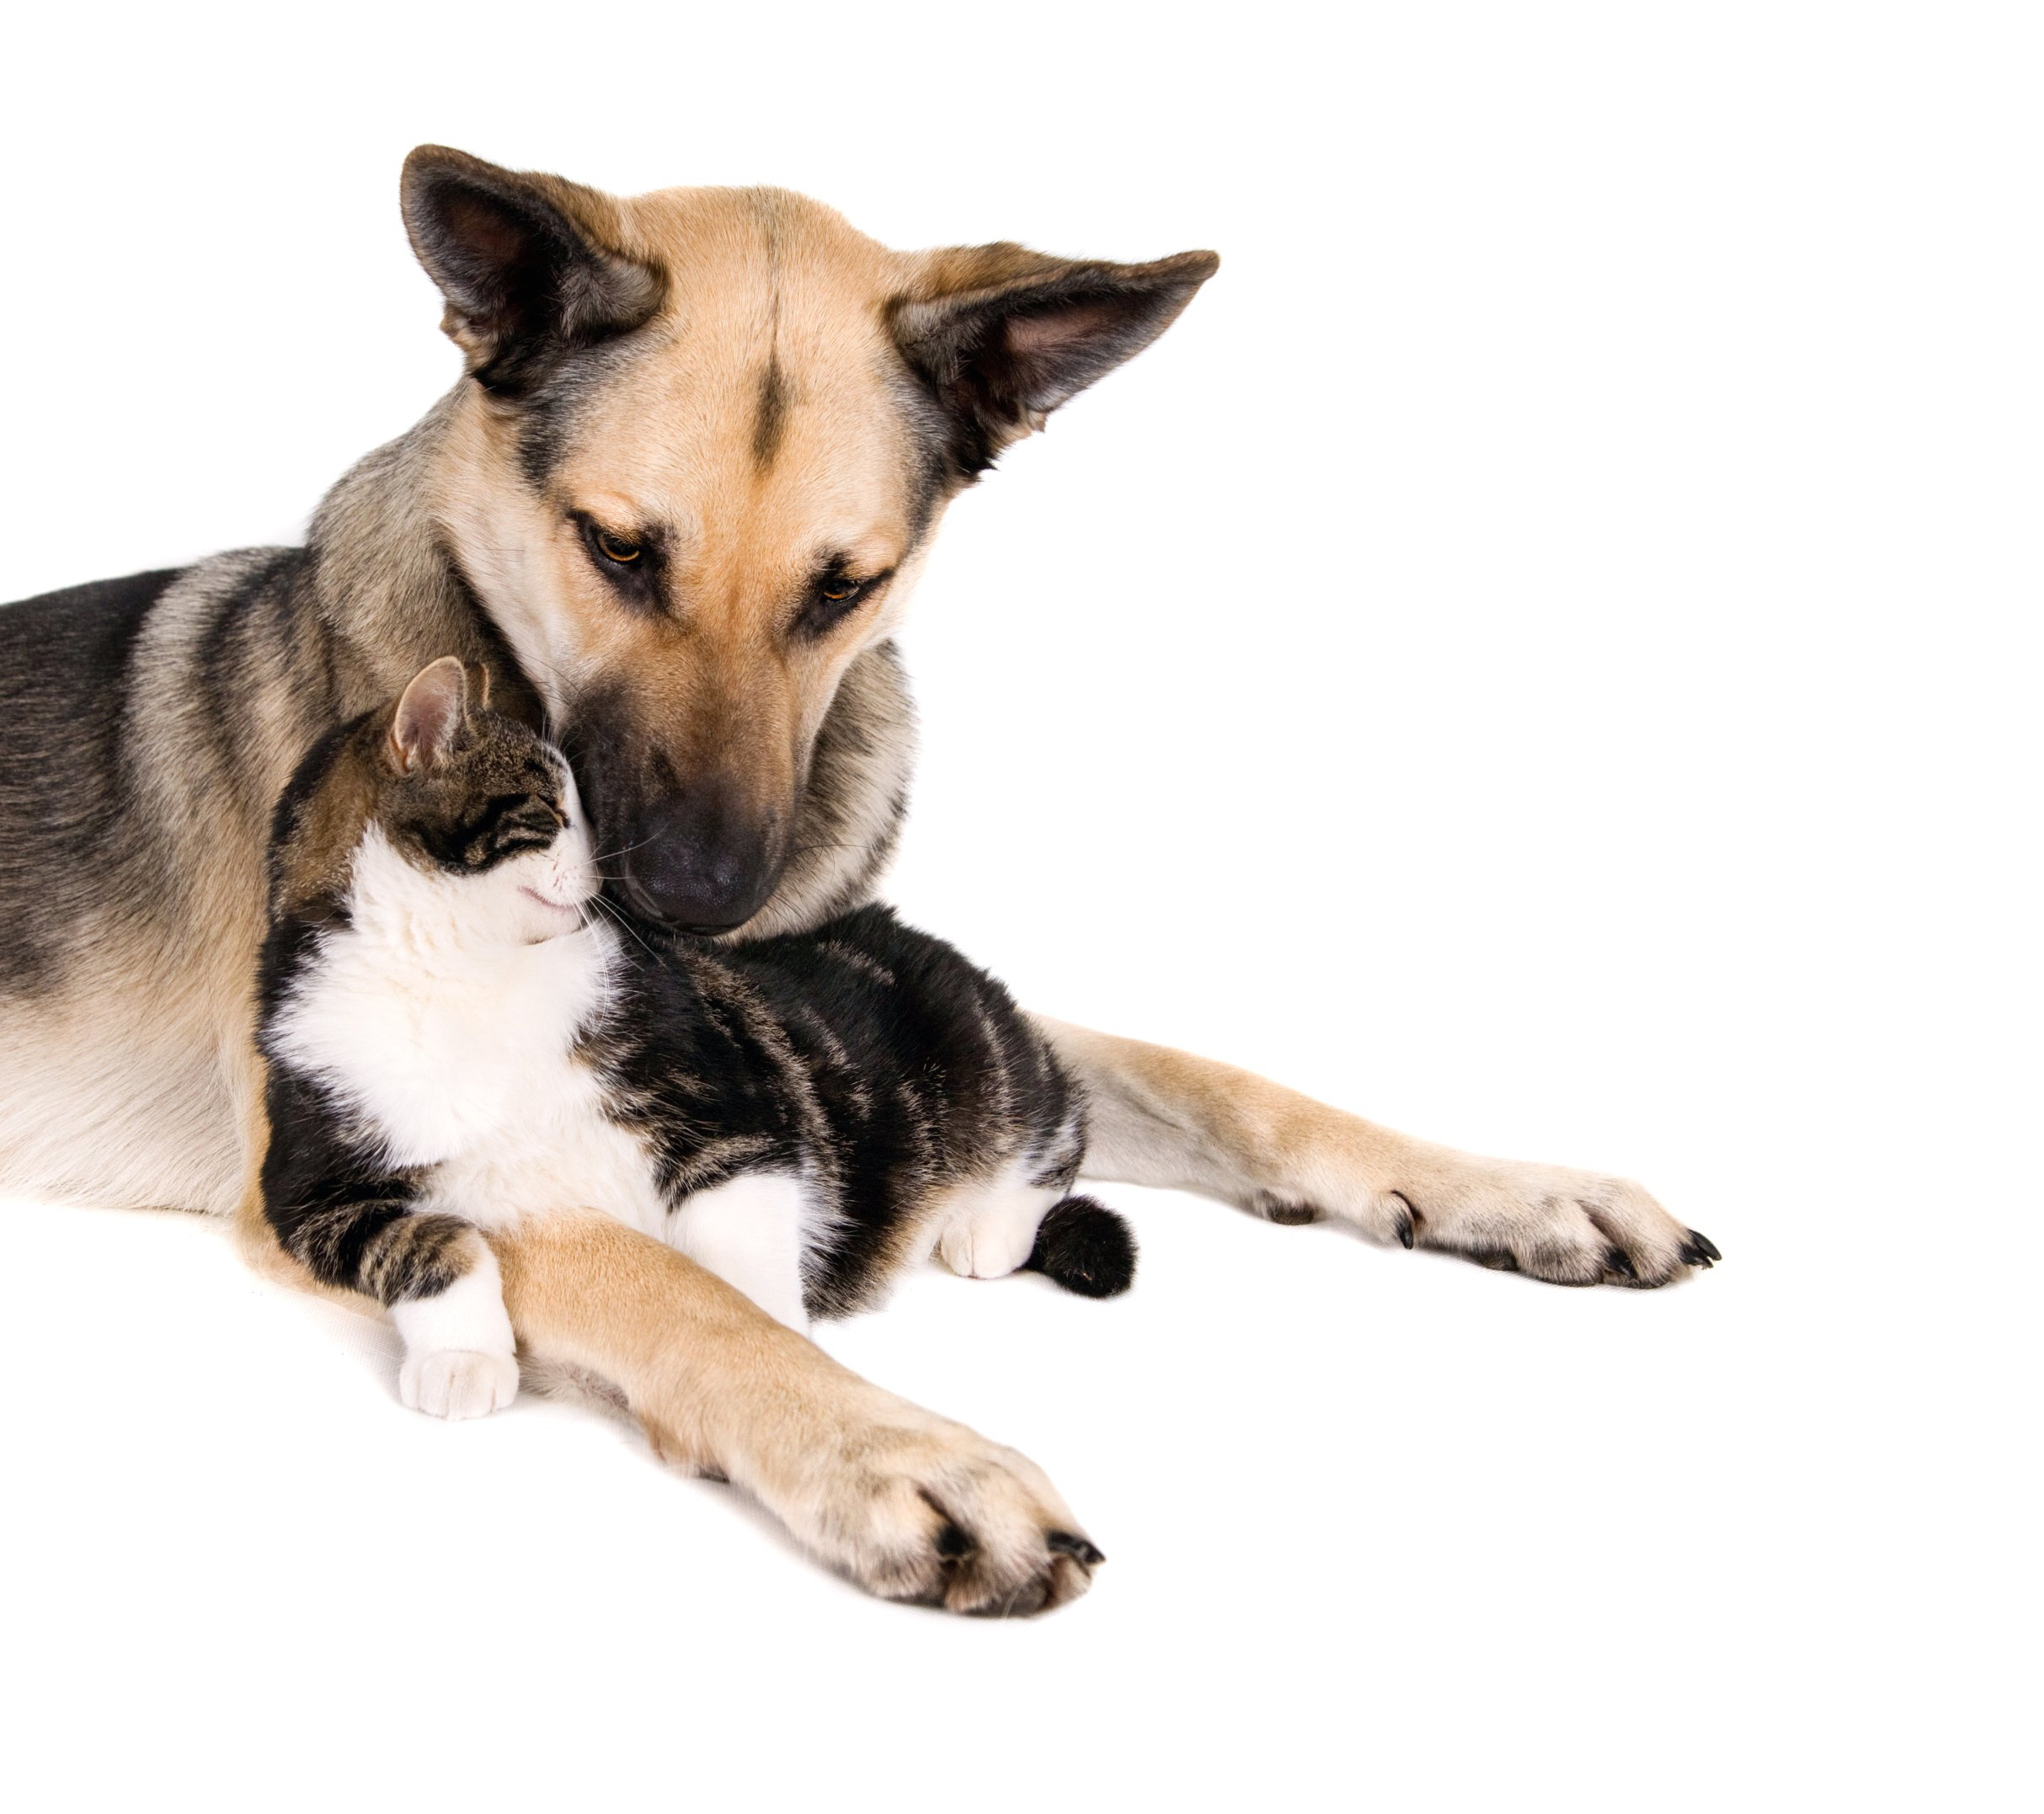 Dog and cat behaviour